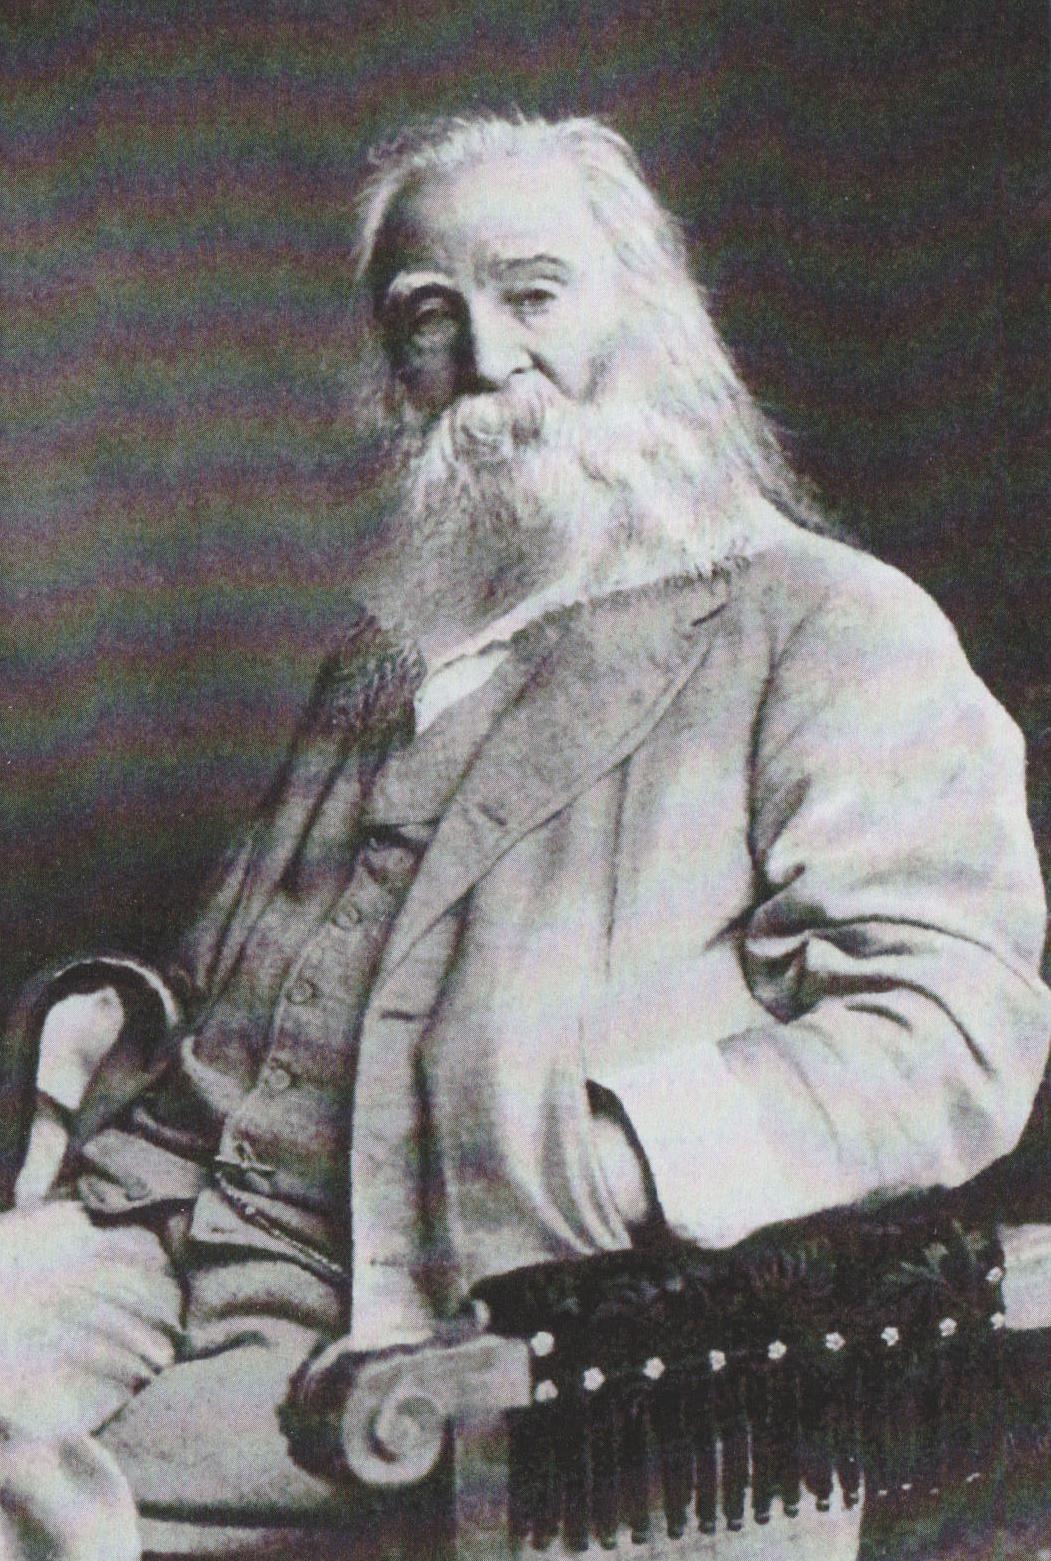 DISTINGUISHED: Portrait of Walt Whitman